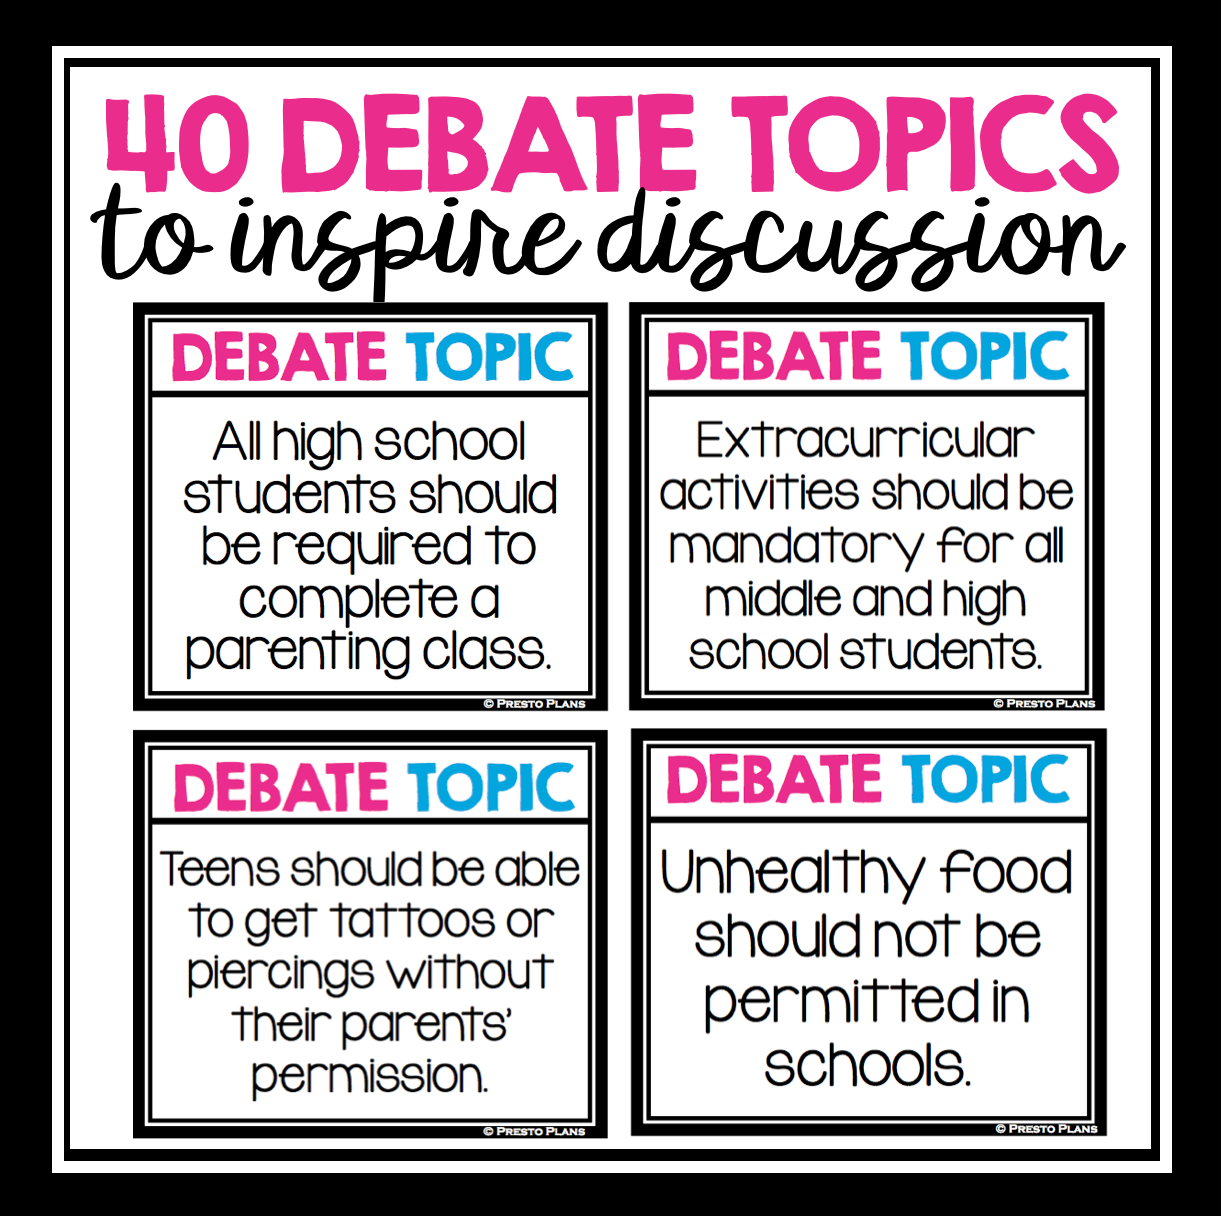 Topic argument. Debate topics. Questions for debate. Debate topics for discussion. Topics for debates.